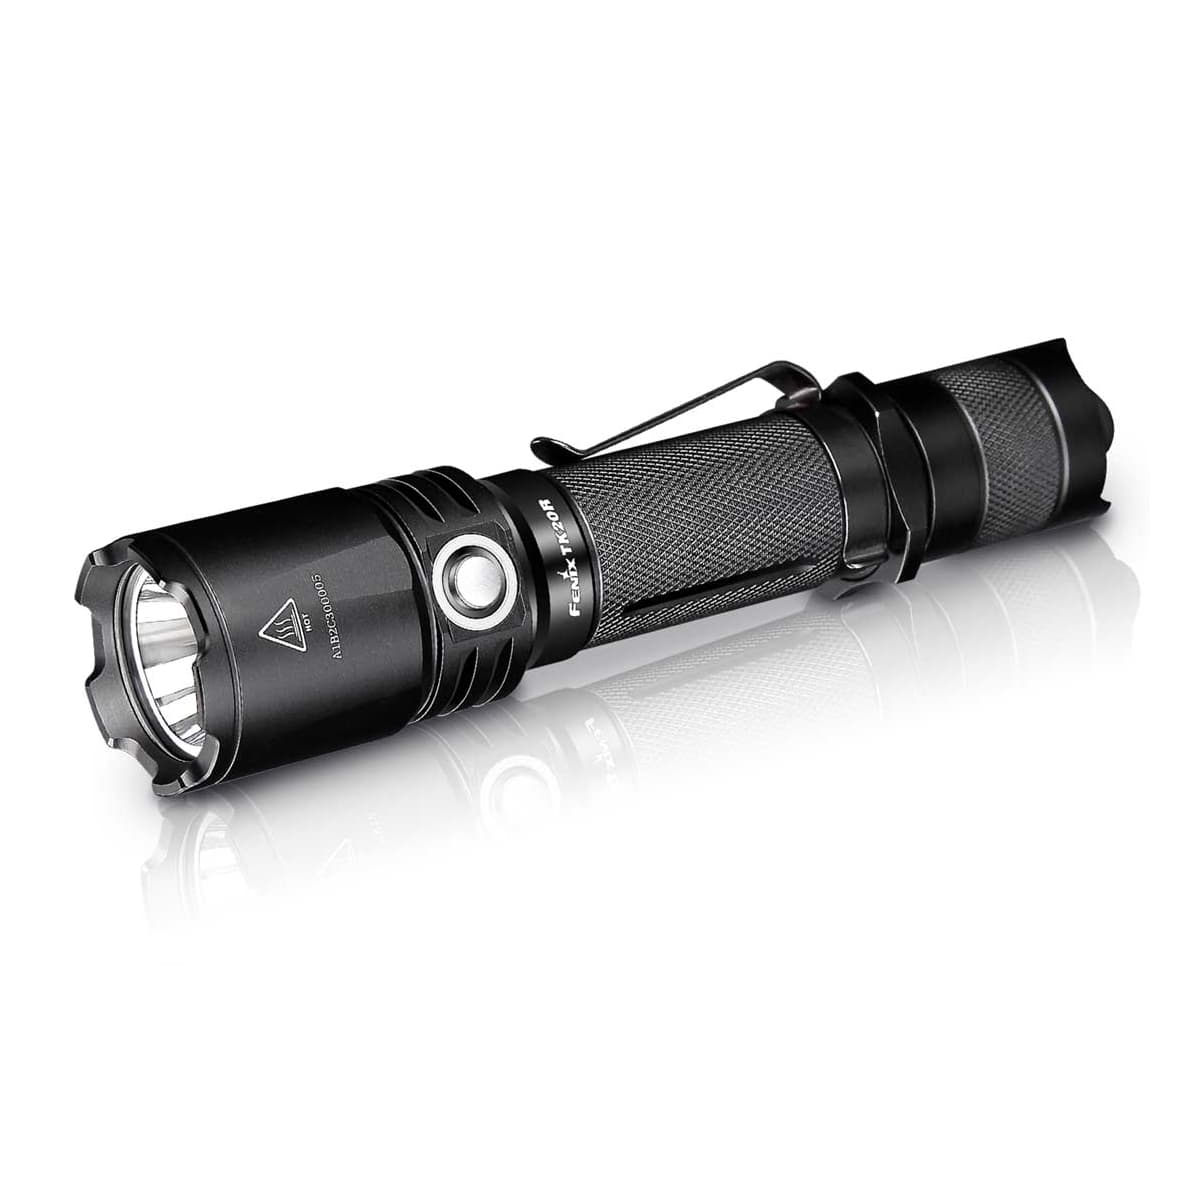 Fenix TK20R Rechargeable Tactical Flashlight